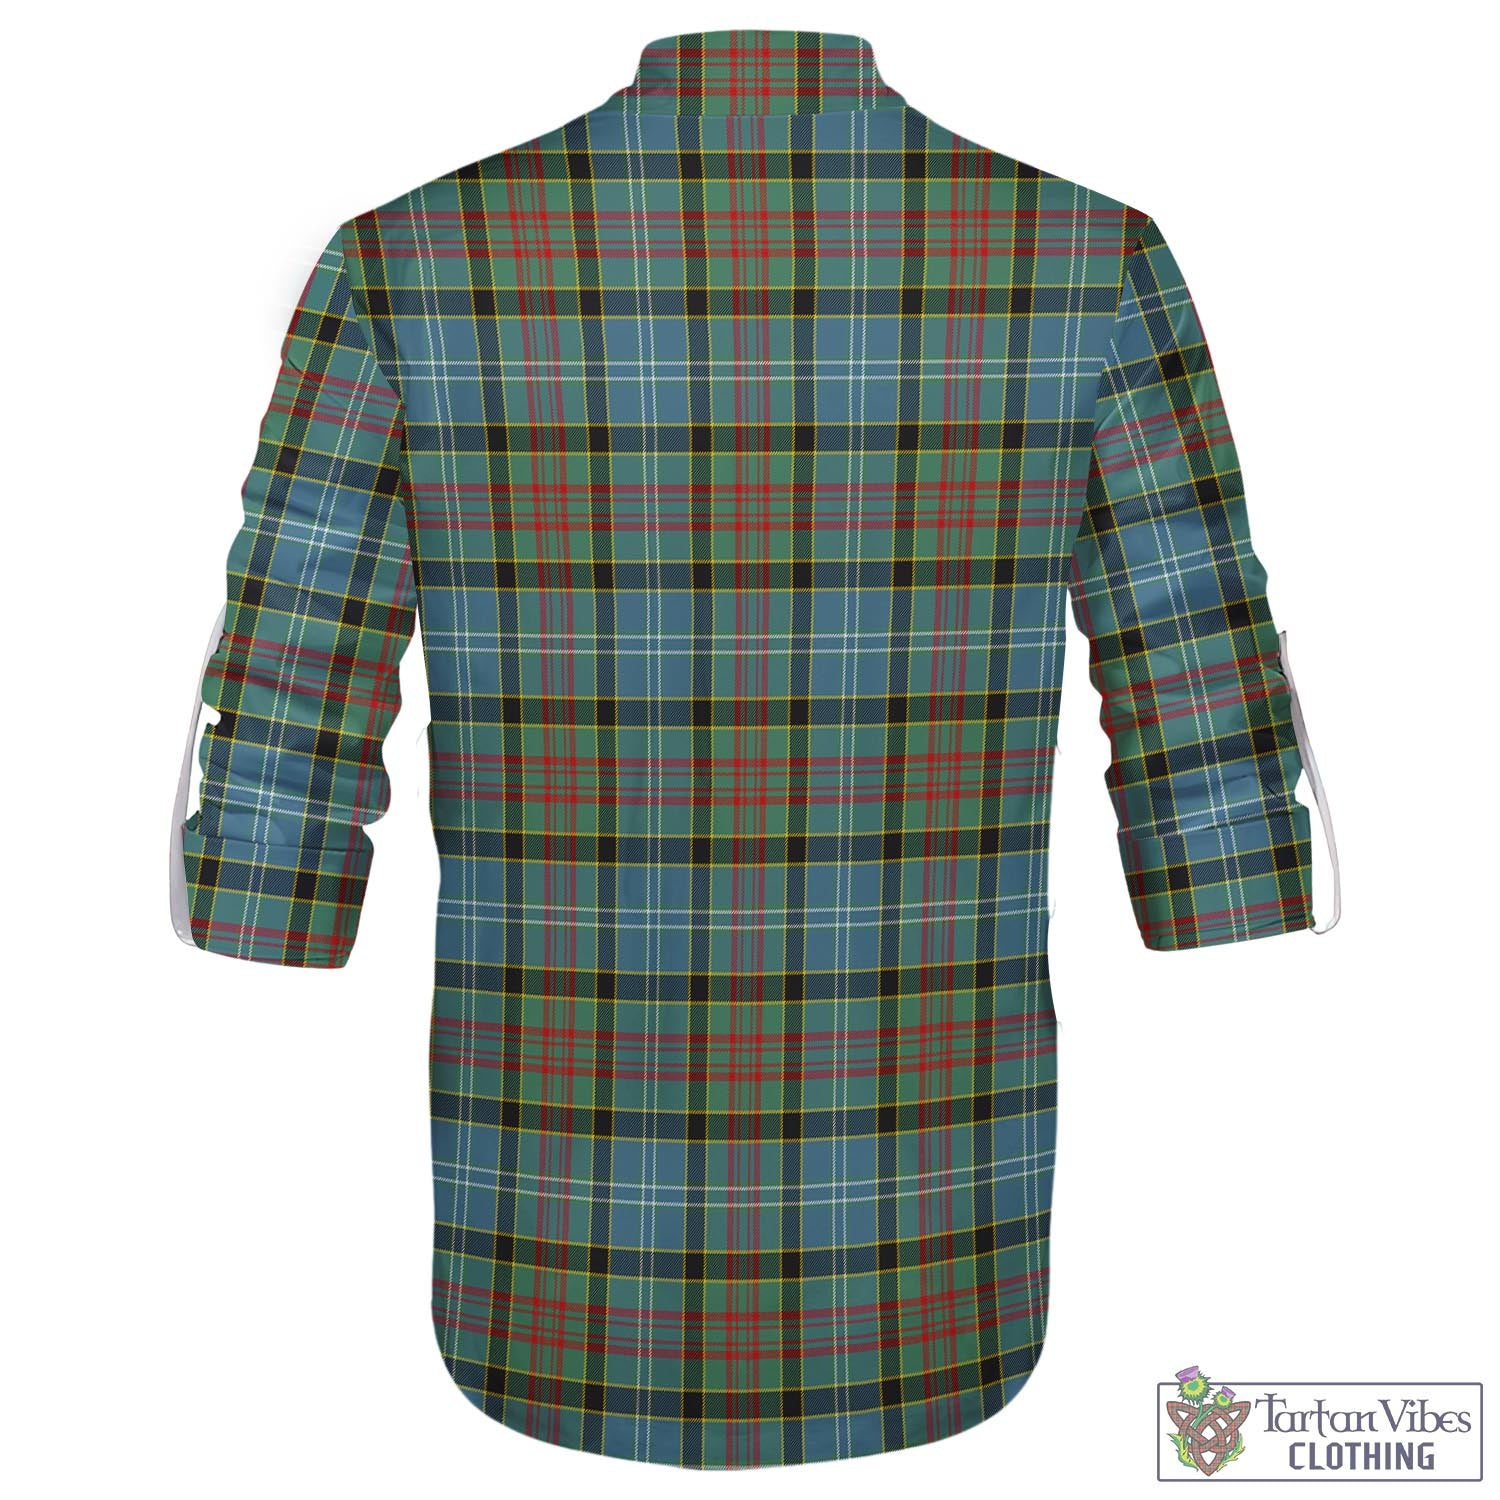 Tartan Vibes Clothing Cathcart Tartan Men's Scottish Traditional Jacobite Ghillie Kilt Shirt with Family Crest